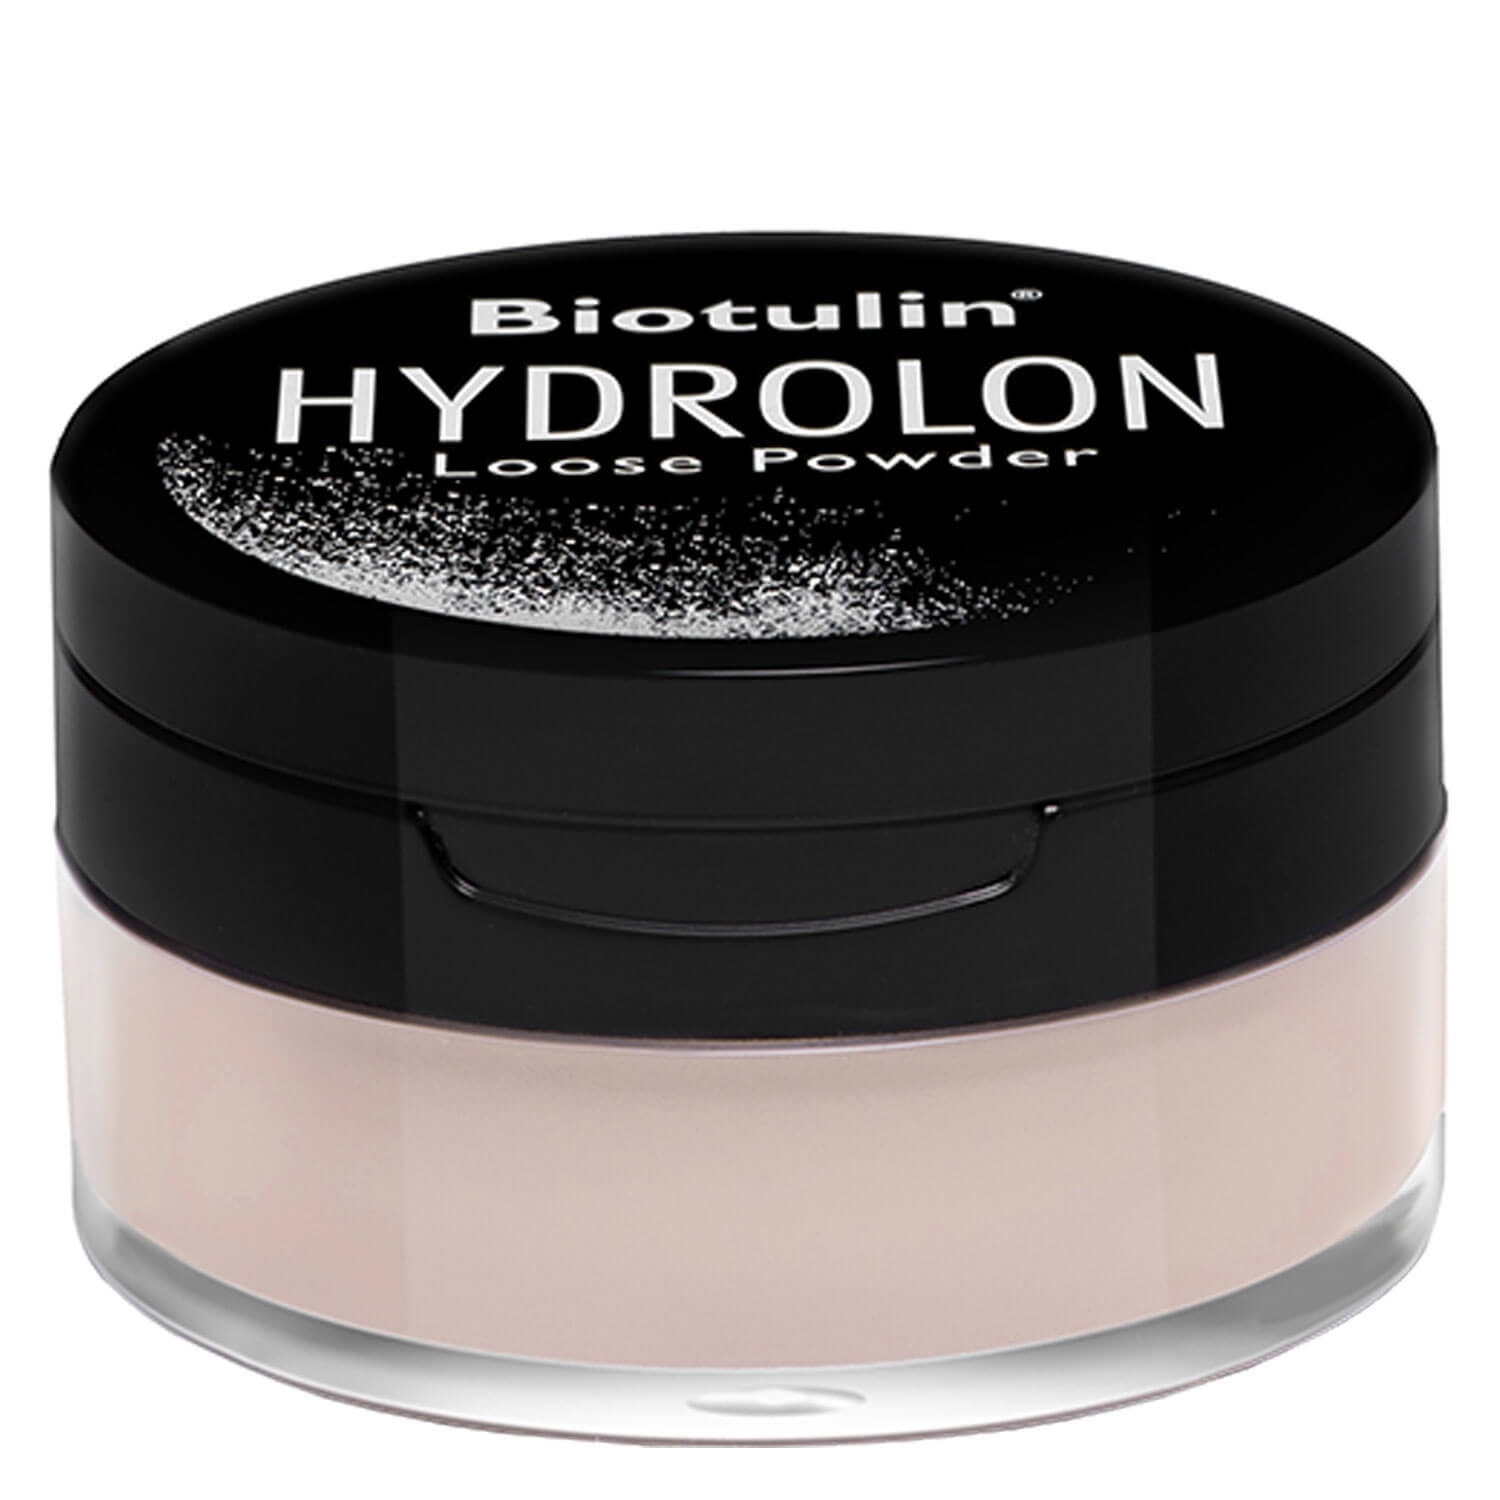 Image du produit de Biotulin - Hydrolon Loose Powder